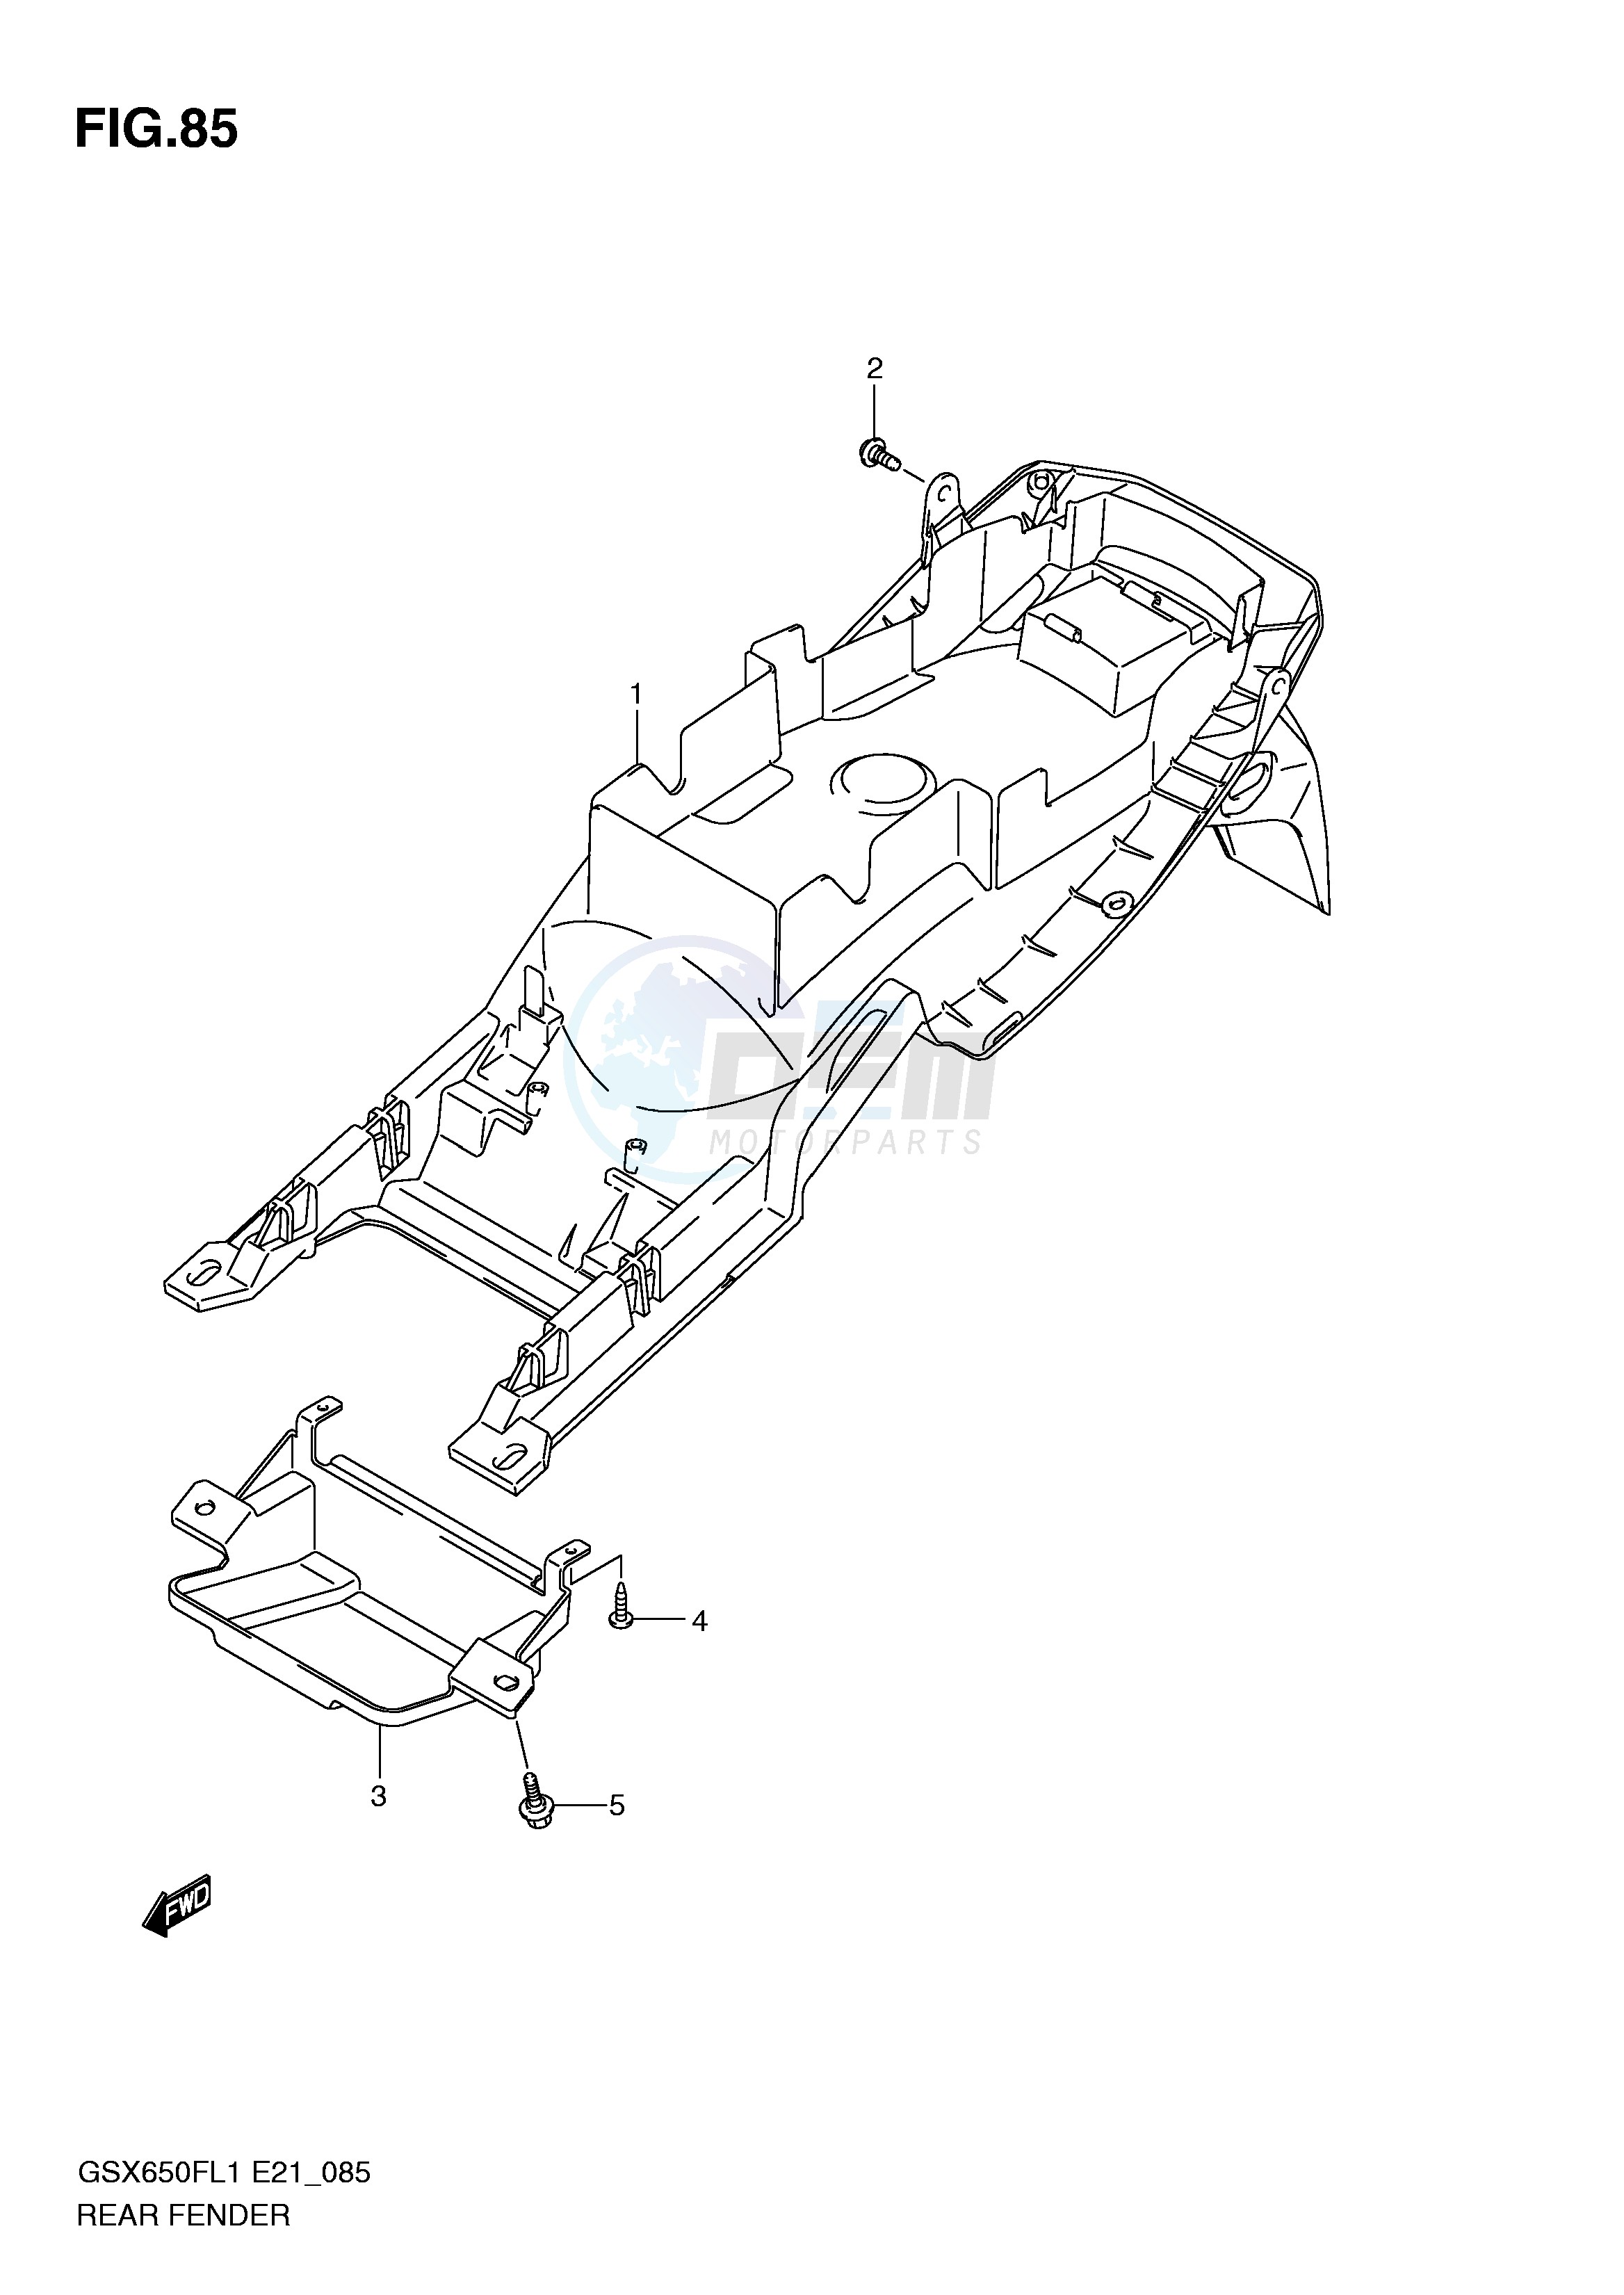 REAR FENDER (GSX650FUL1 E21) blueprint